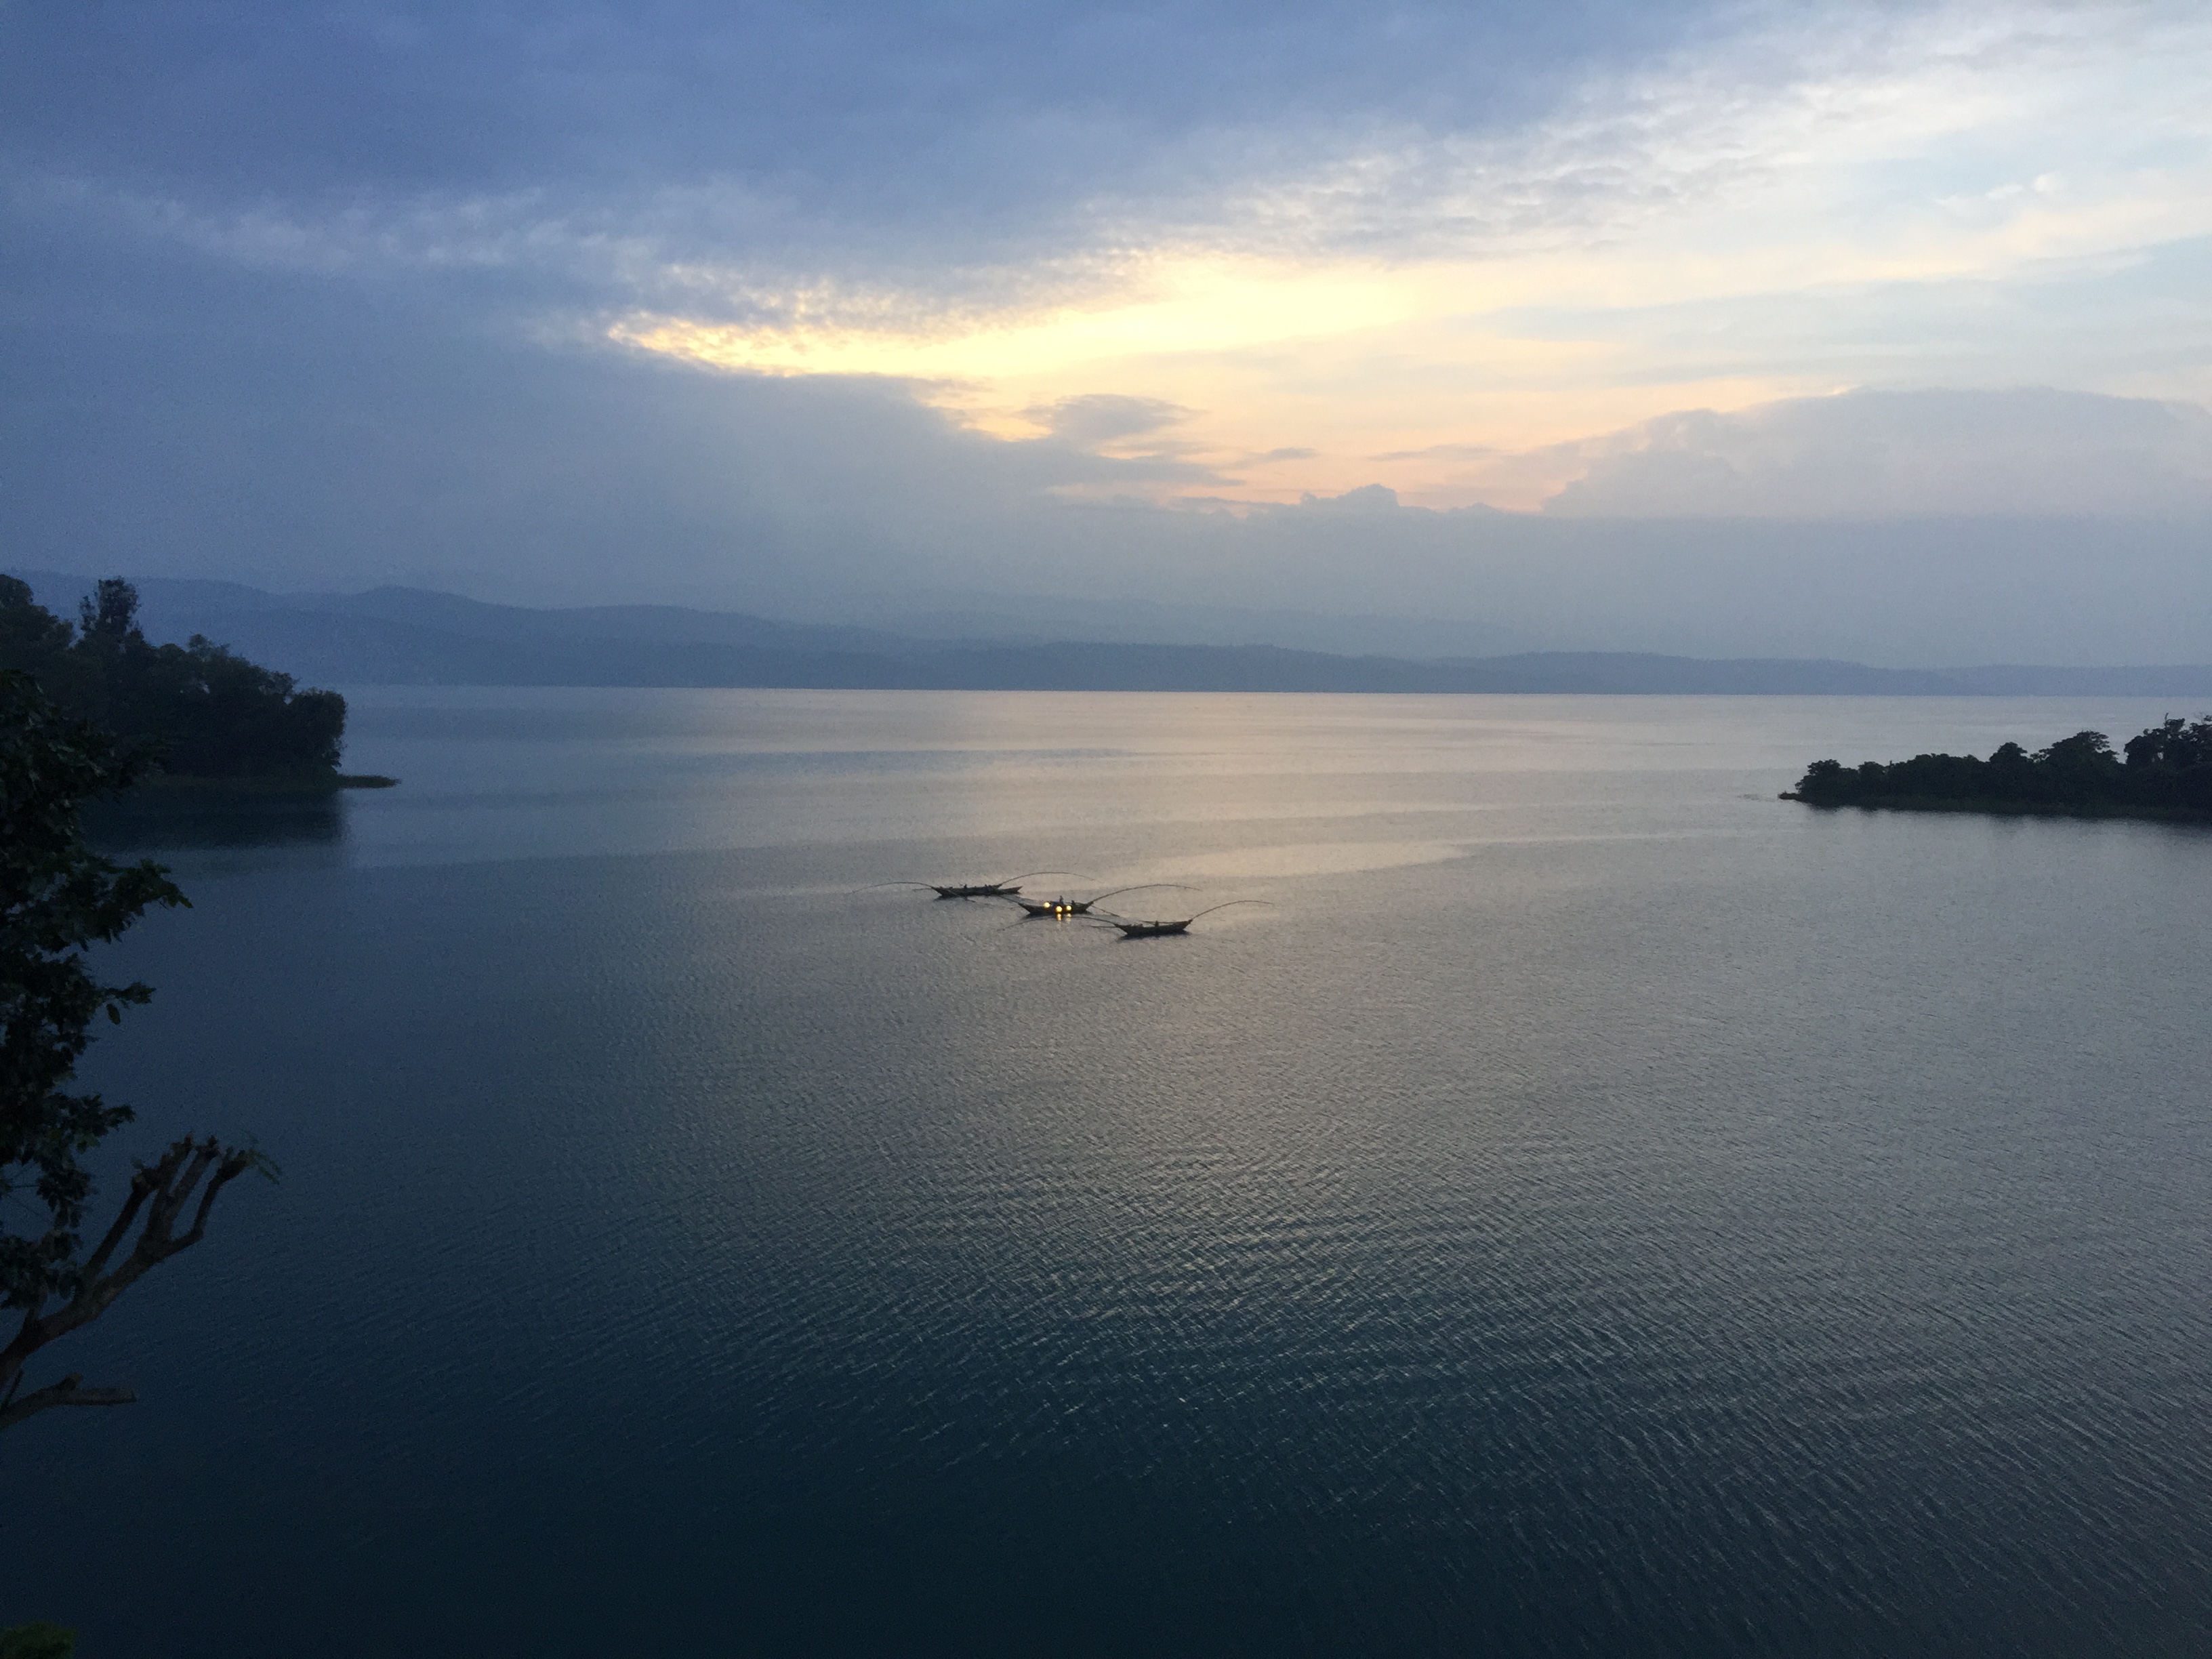 Lake Kivu at sunset under a tranquil sky